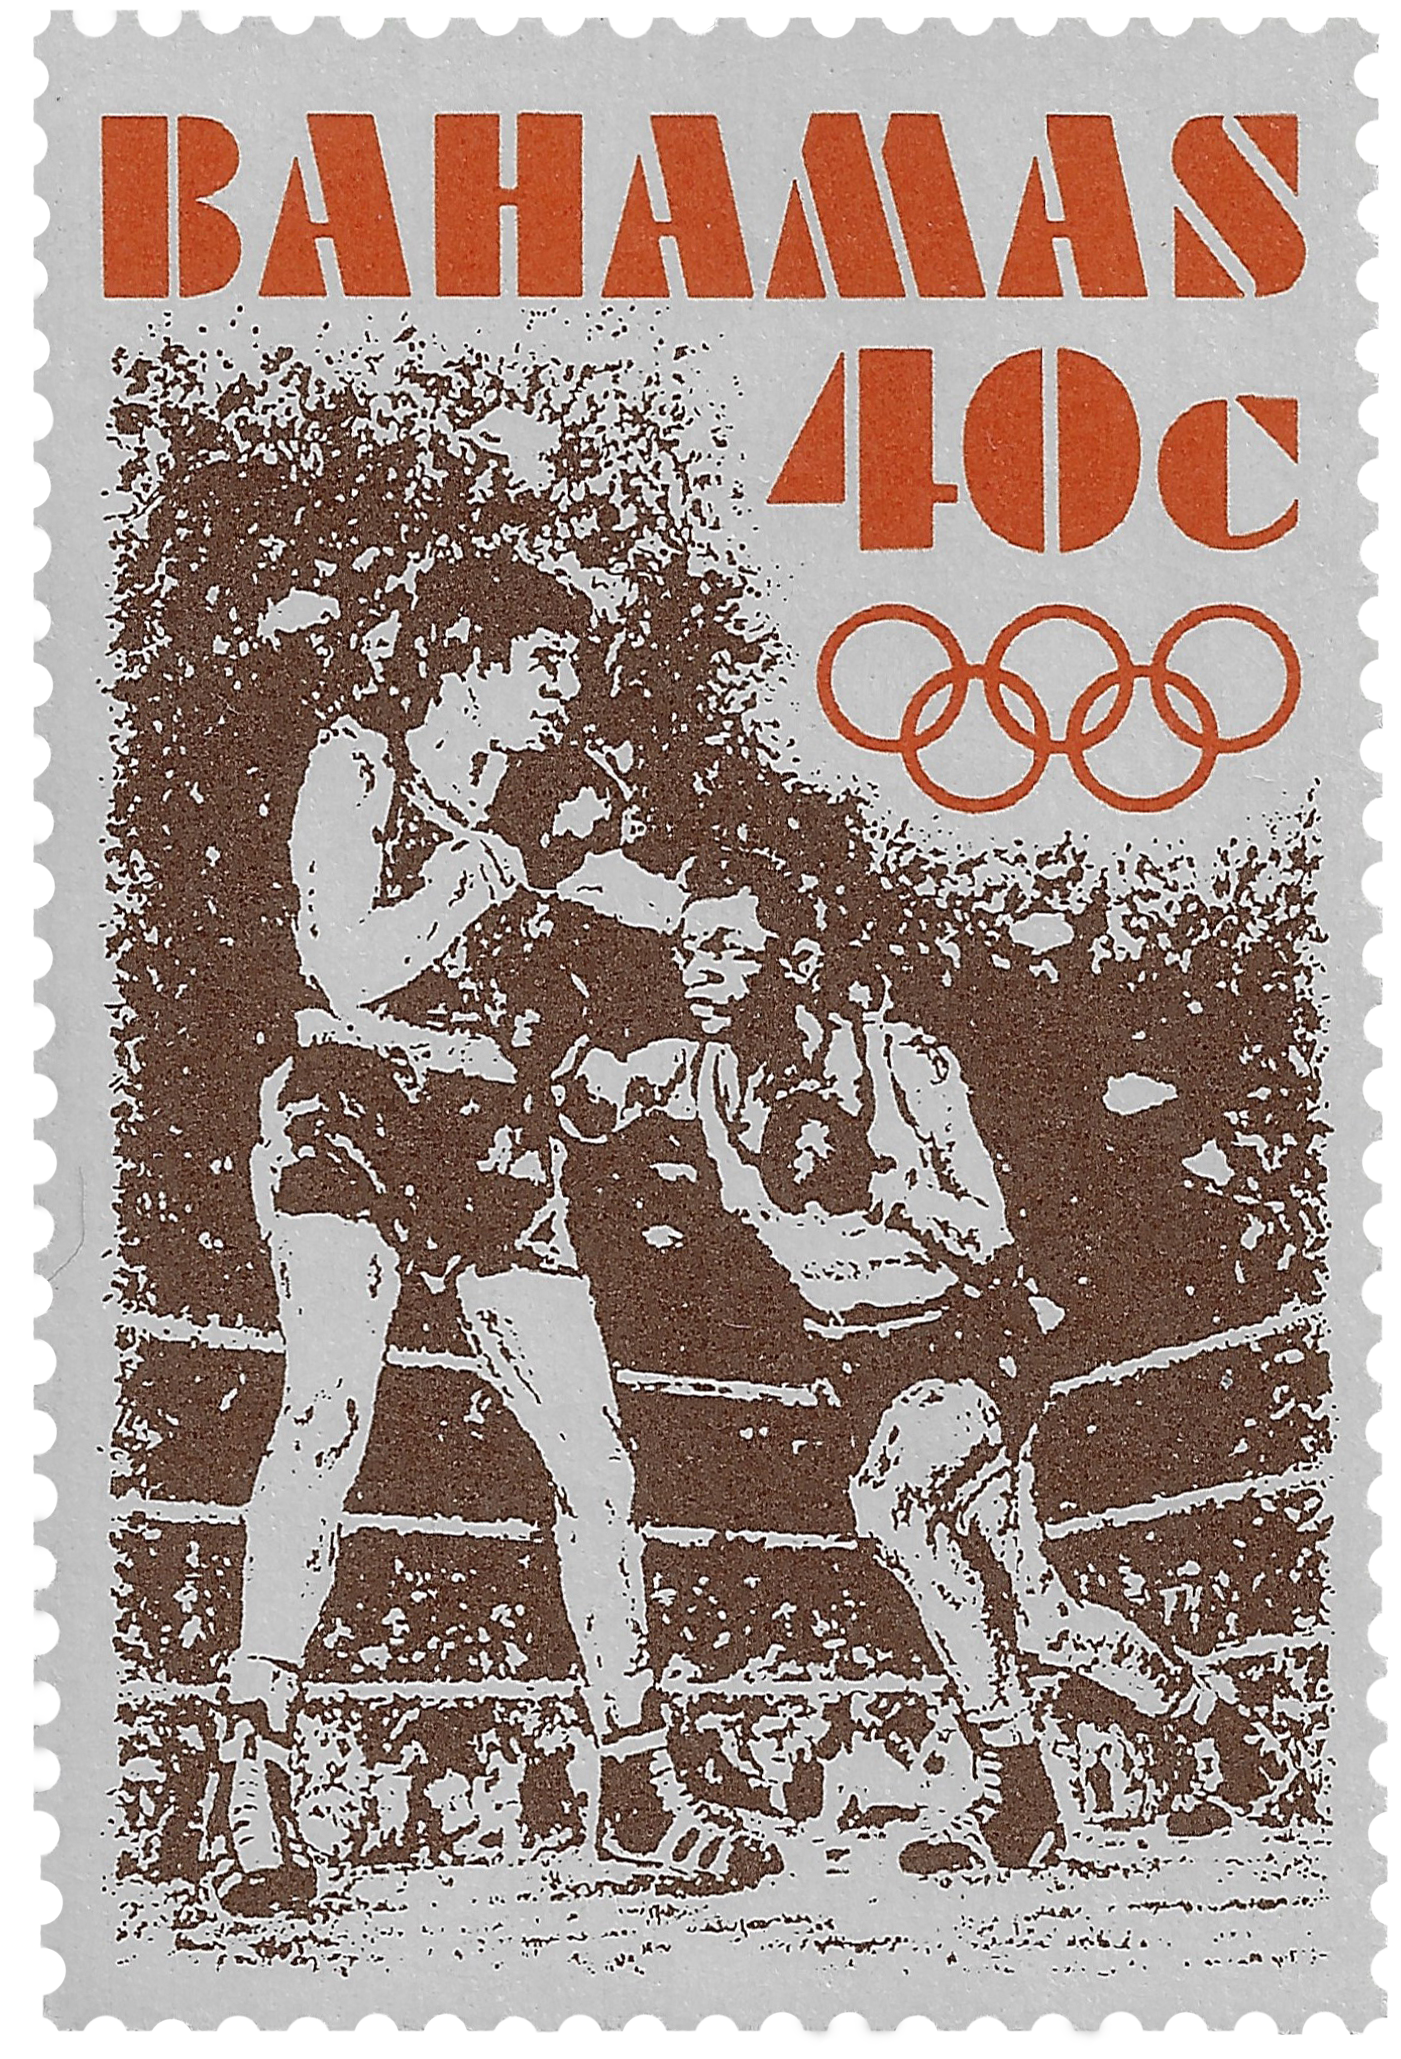 40c 1976, Olympics